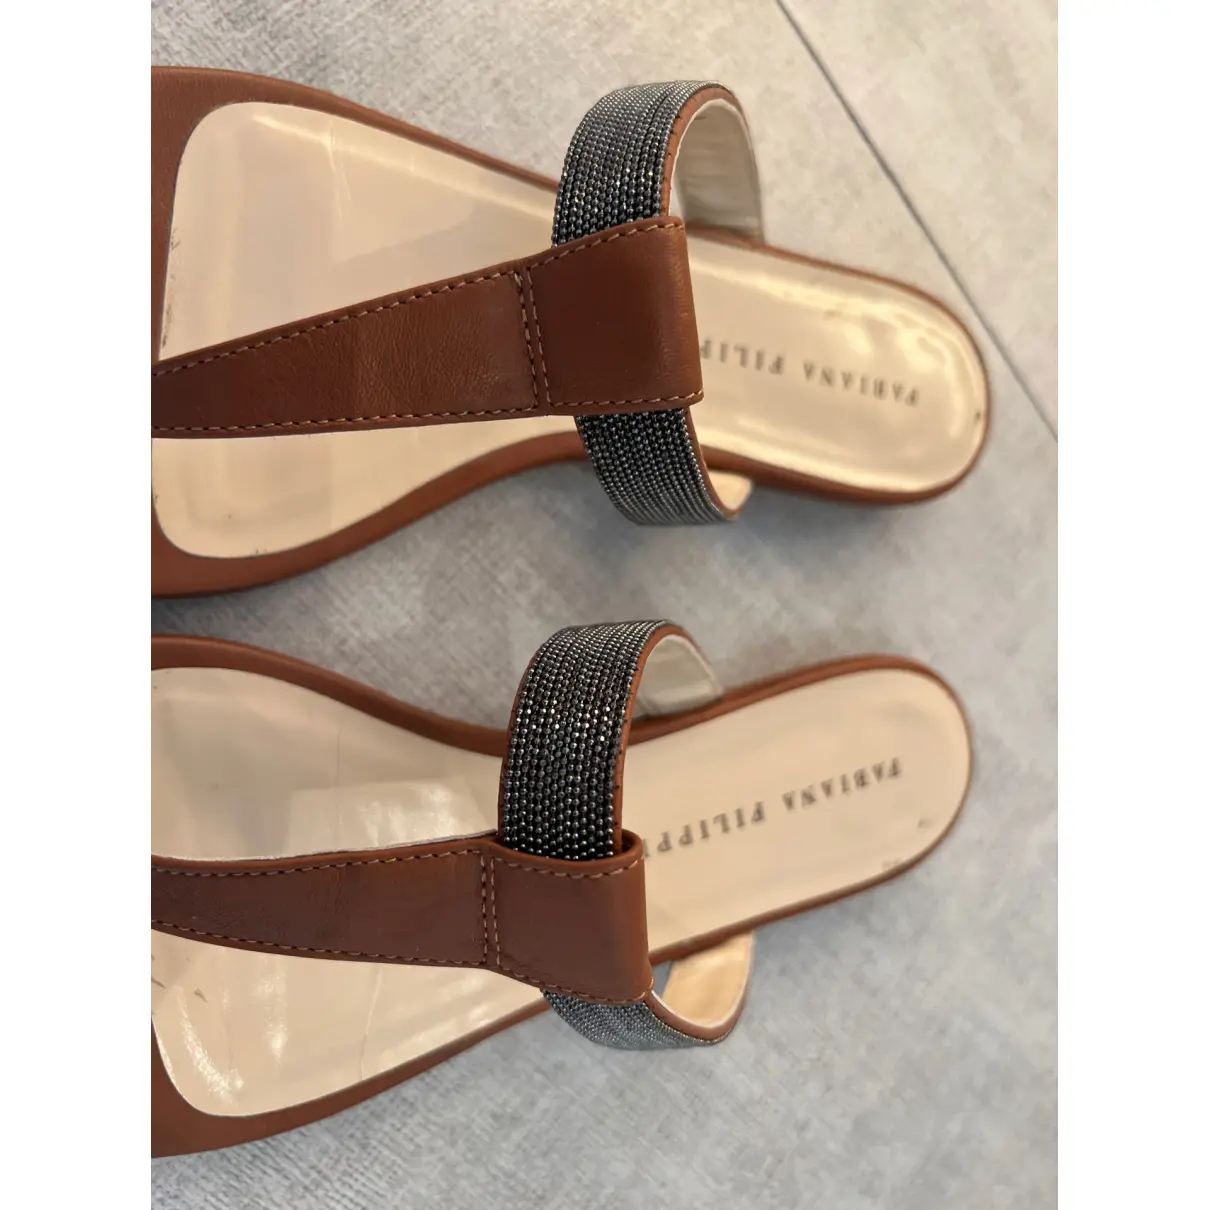 Buy Fabiana Filippi Glitter sandals online